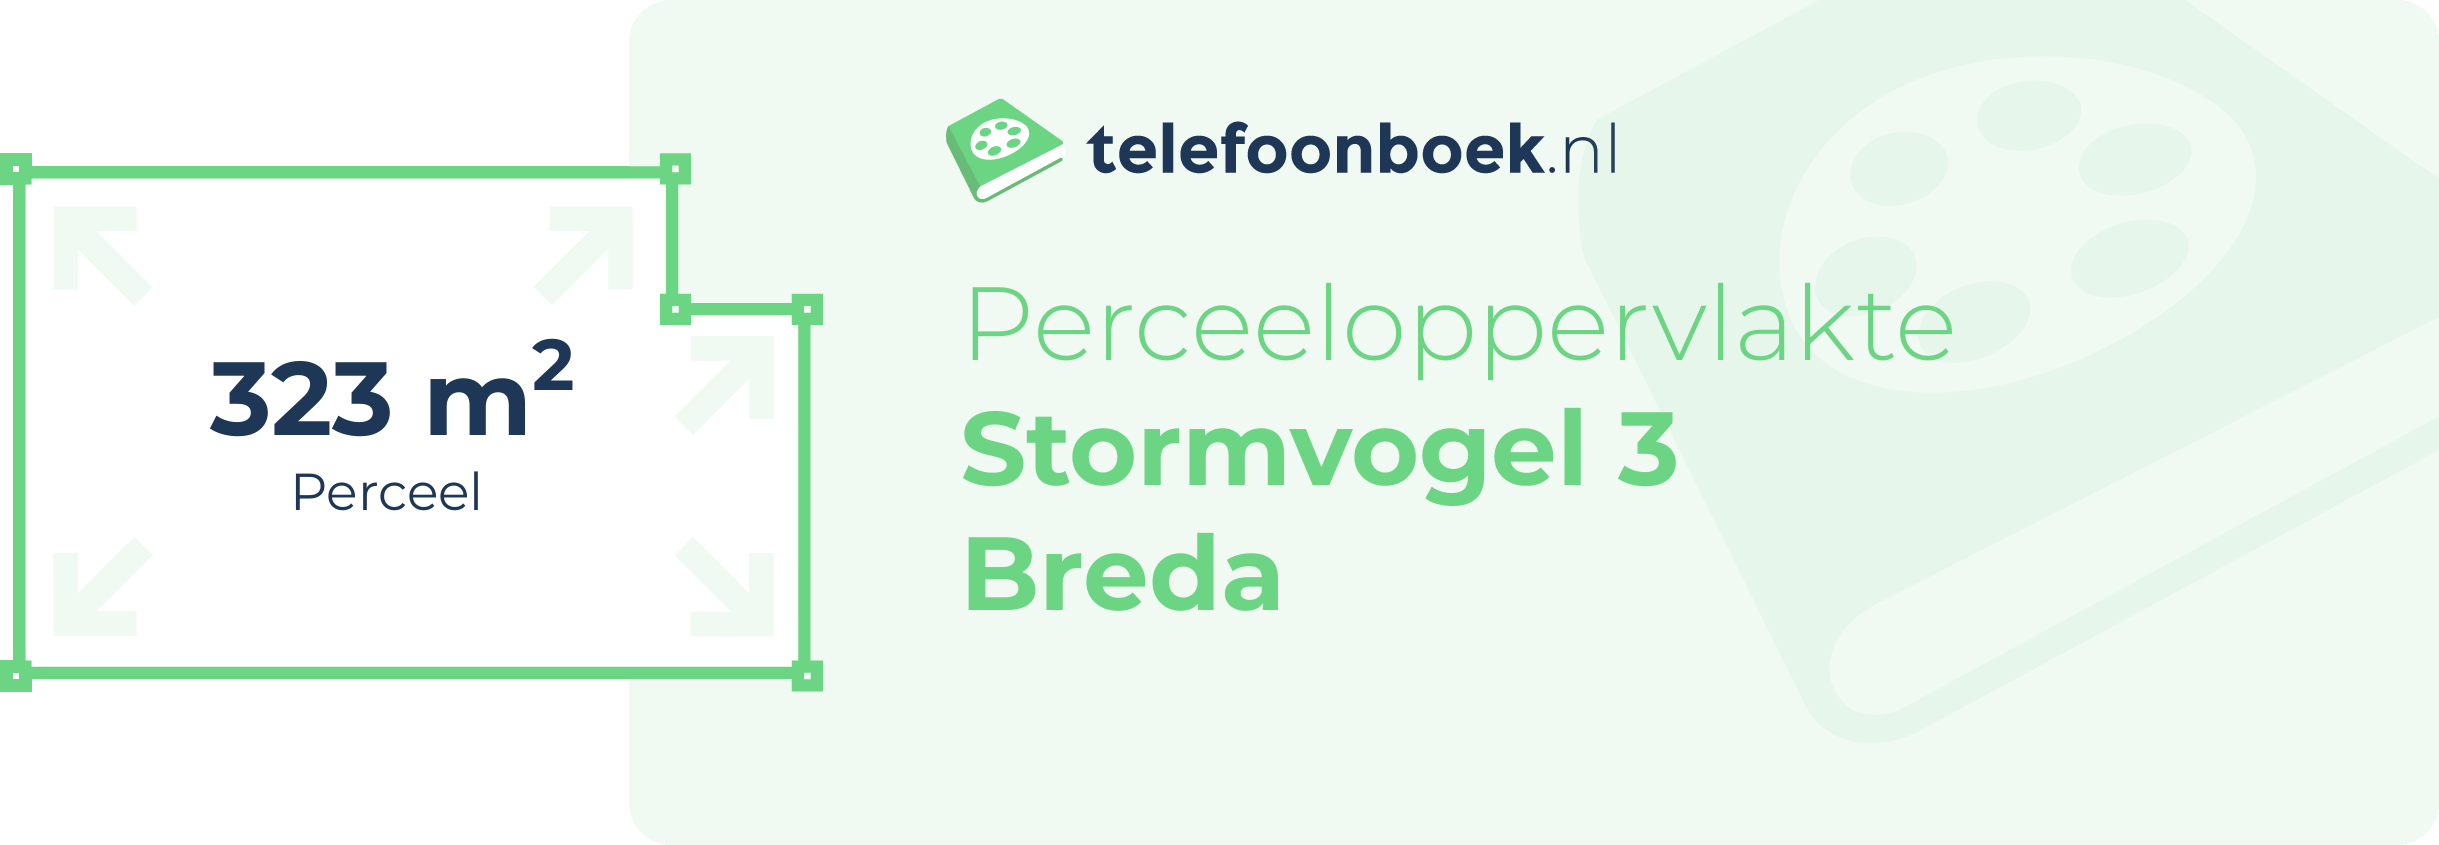 Perceeloppervlakte Stormvogel 3 Breda